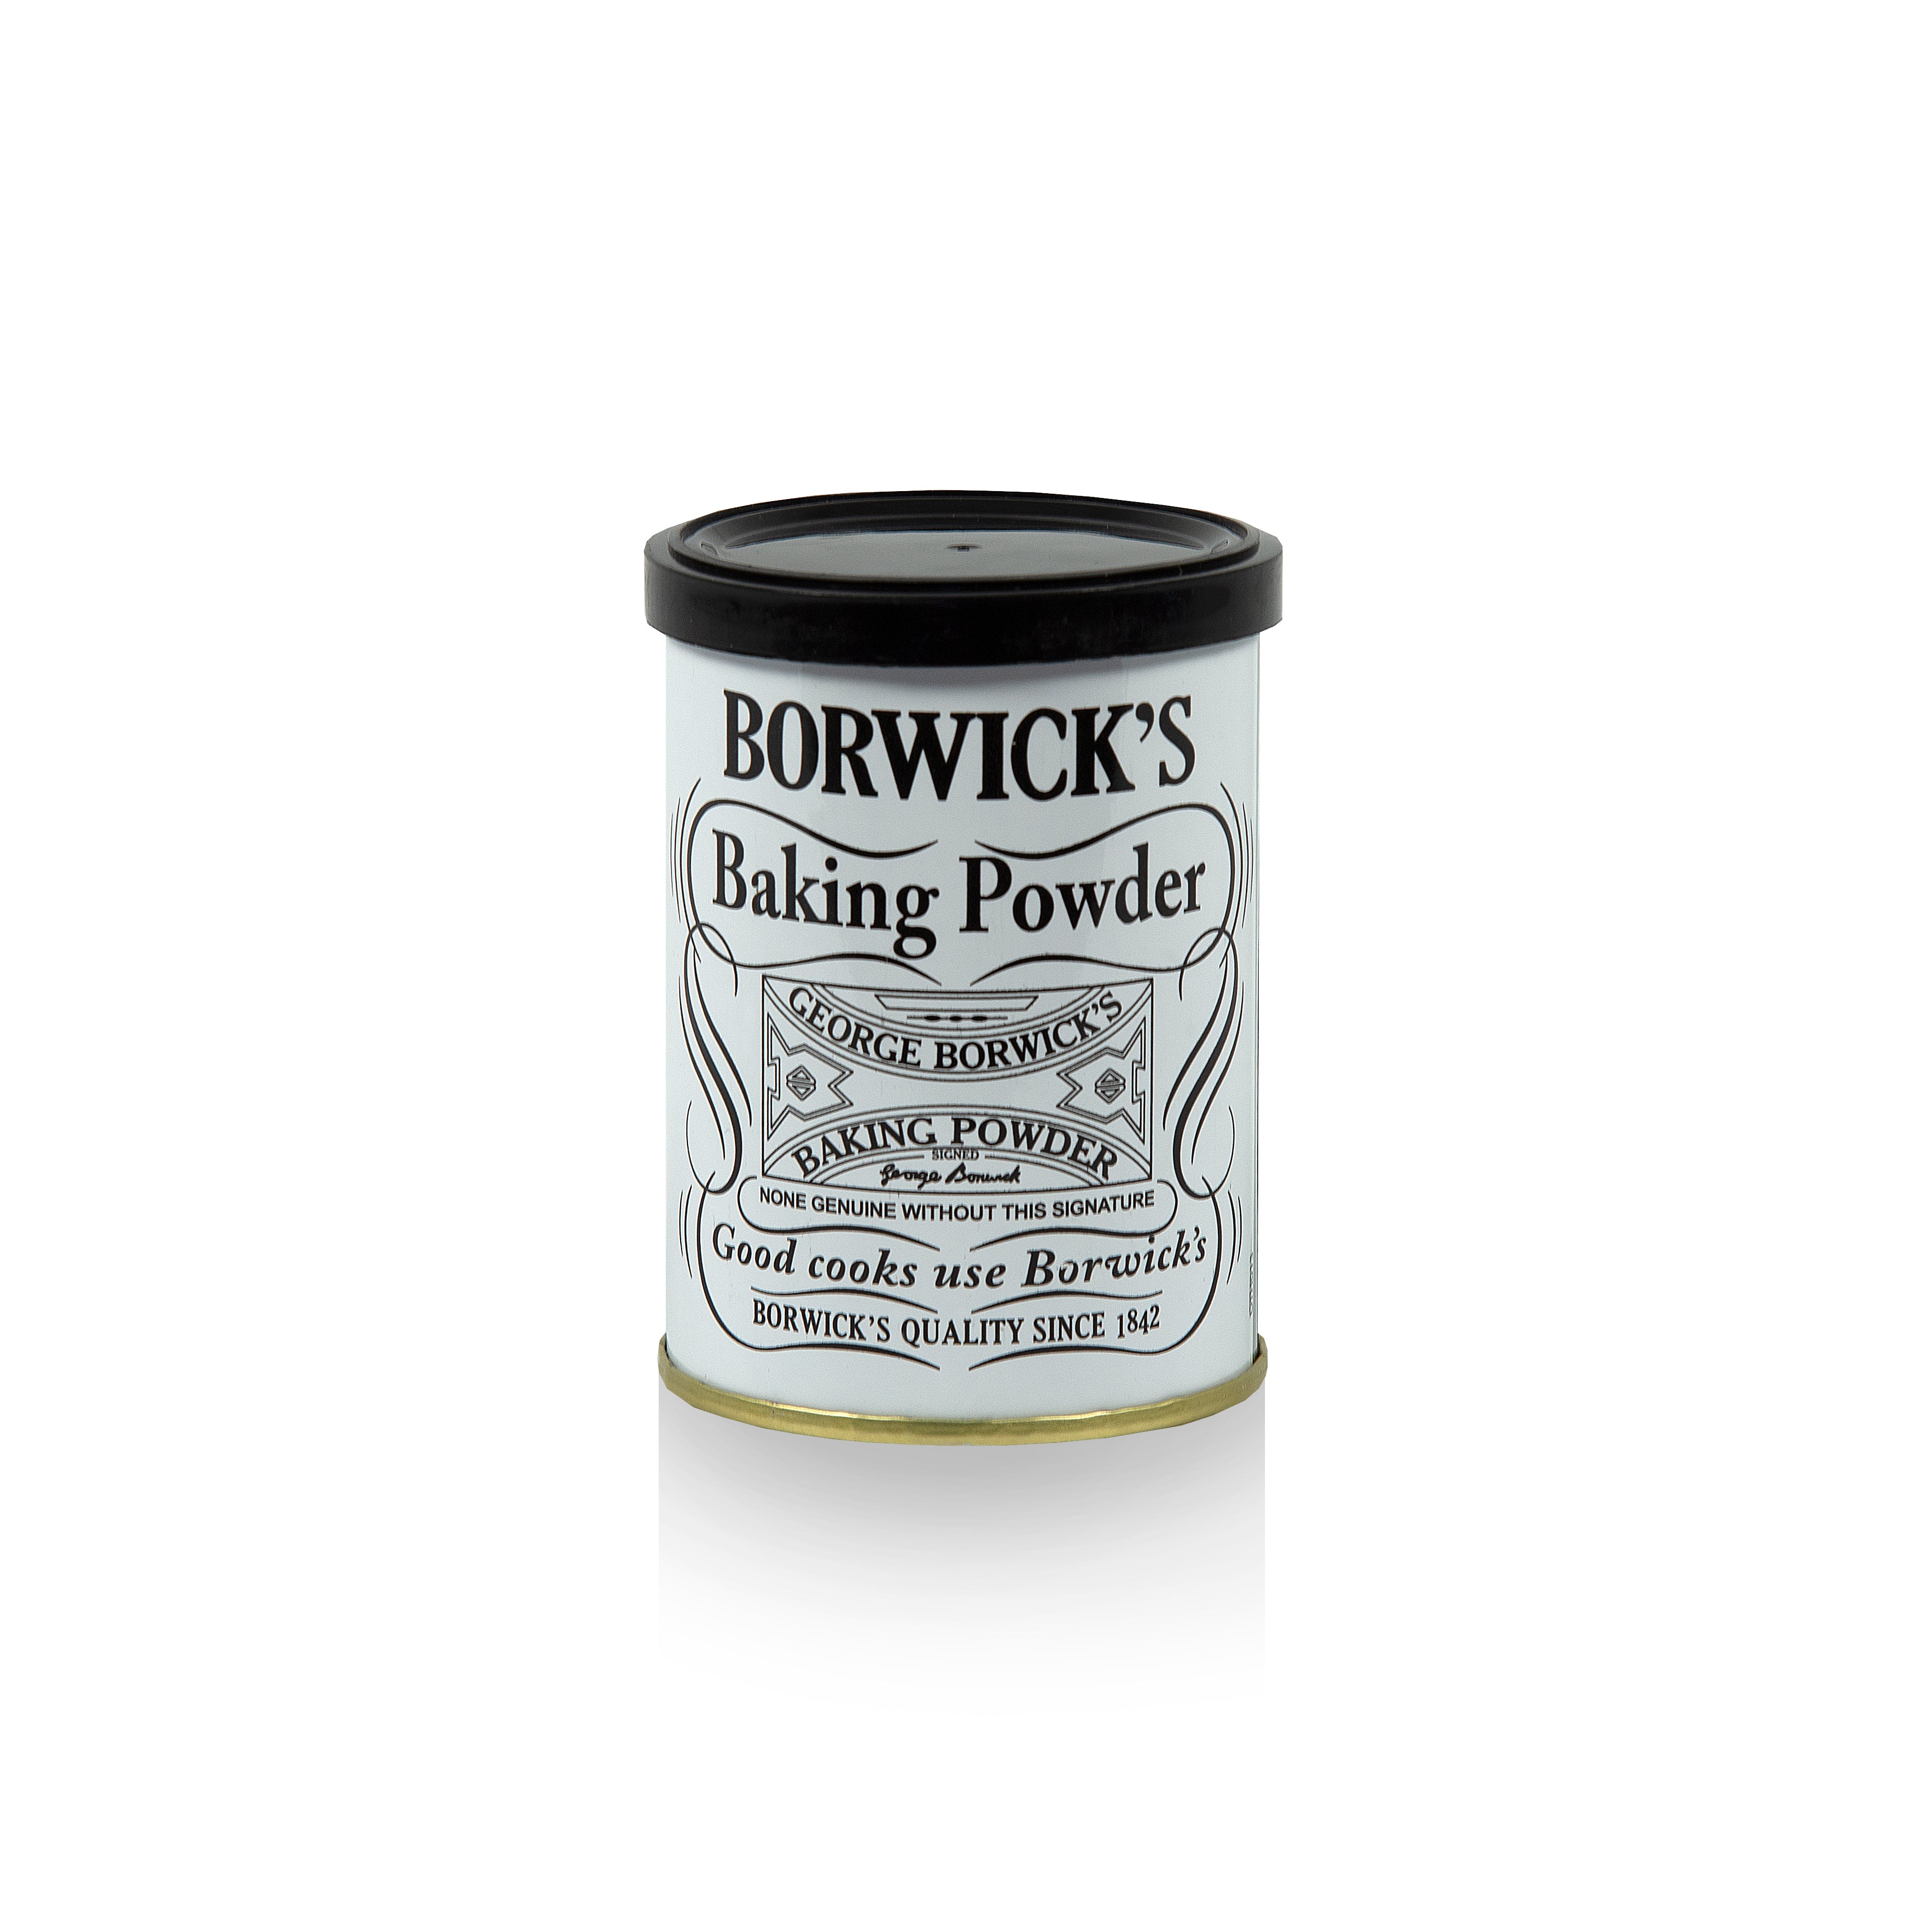 Borwick's Baking Powder 100g - Pack of 12